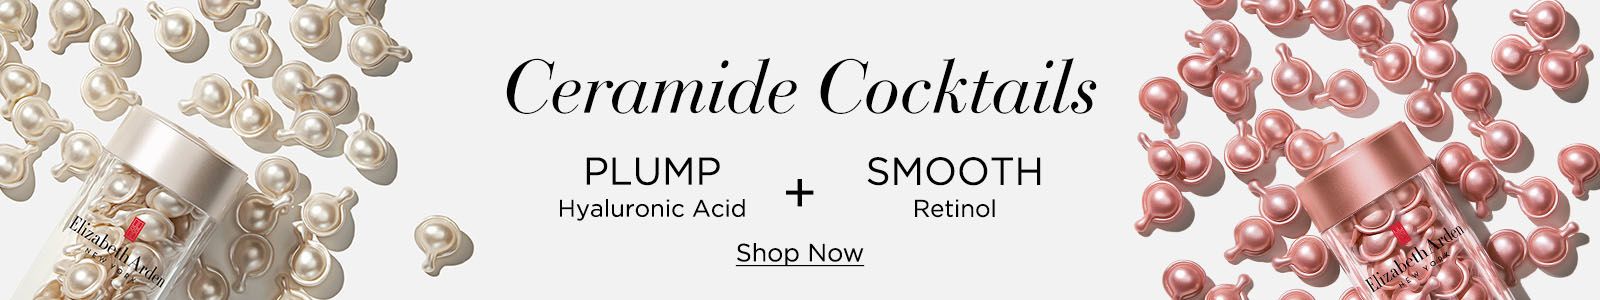 Ceramide Cocktails, Plump Hyaluronic Acid + Smooth Retinol 